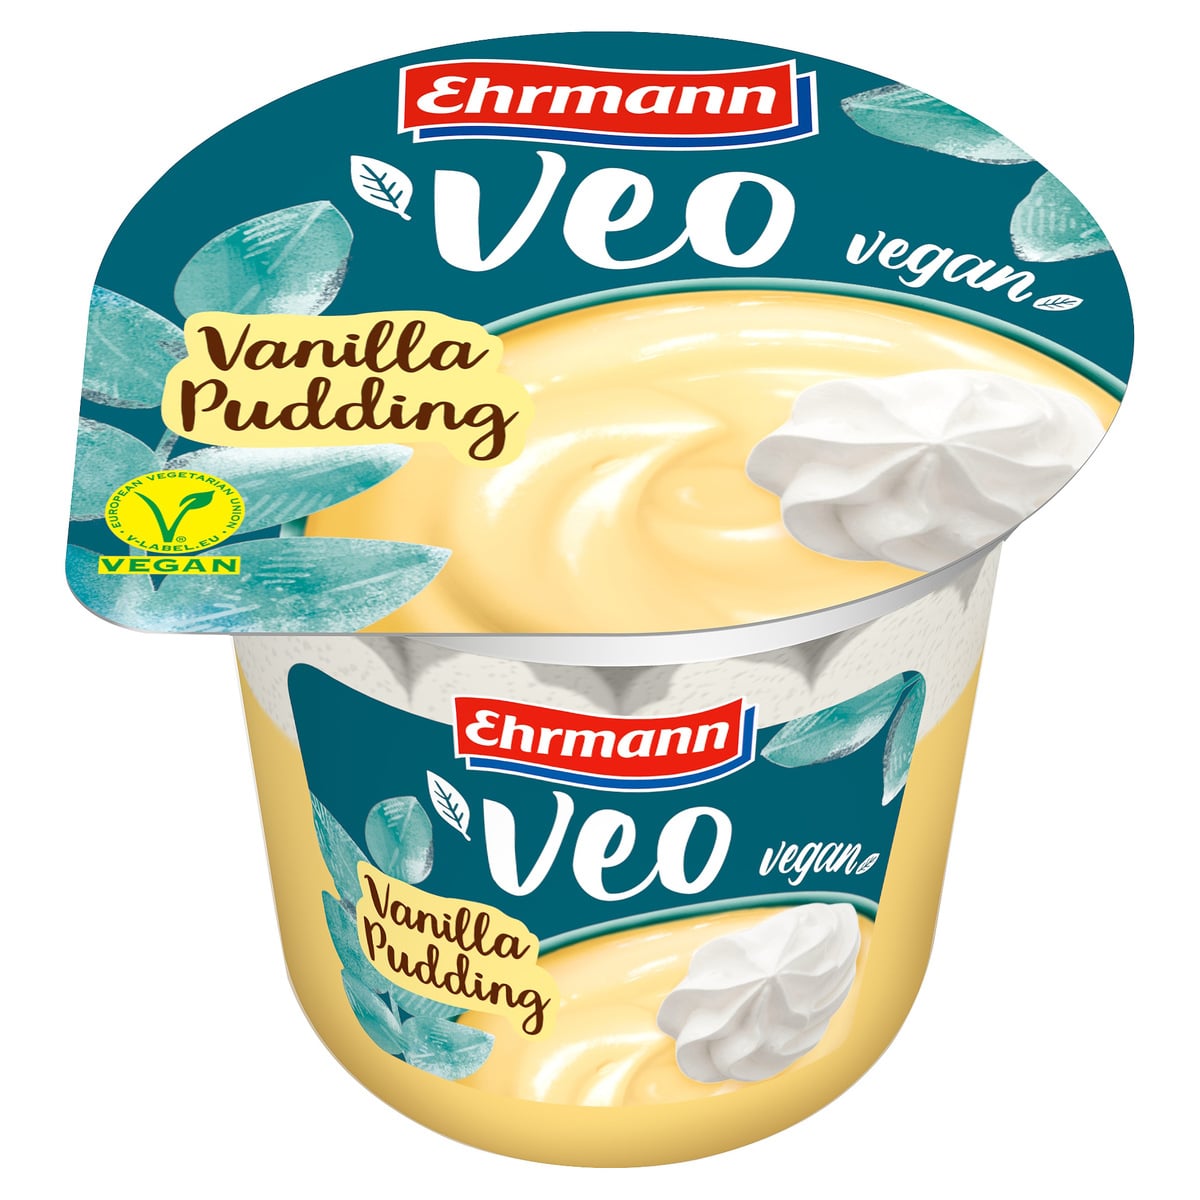 Ehrmann Veo Vegan Pudding mit Topping Vanille 175g